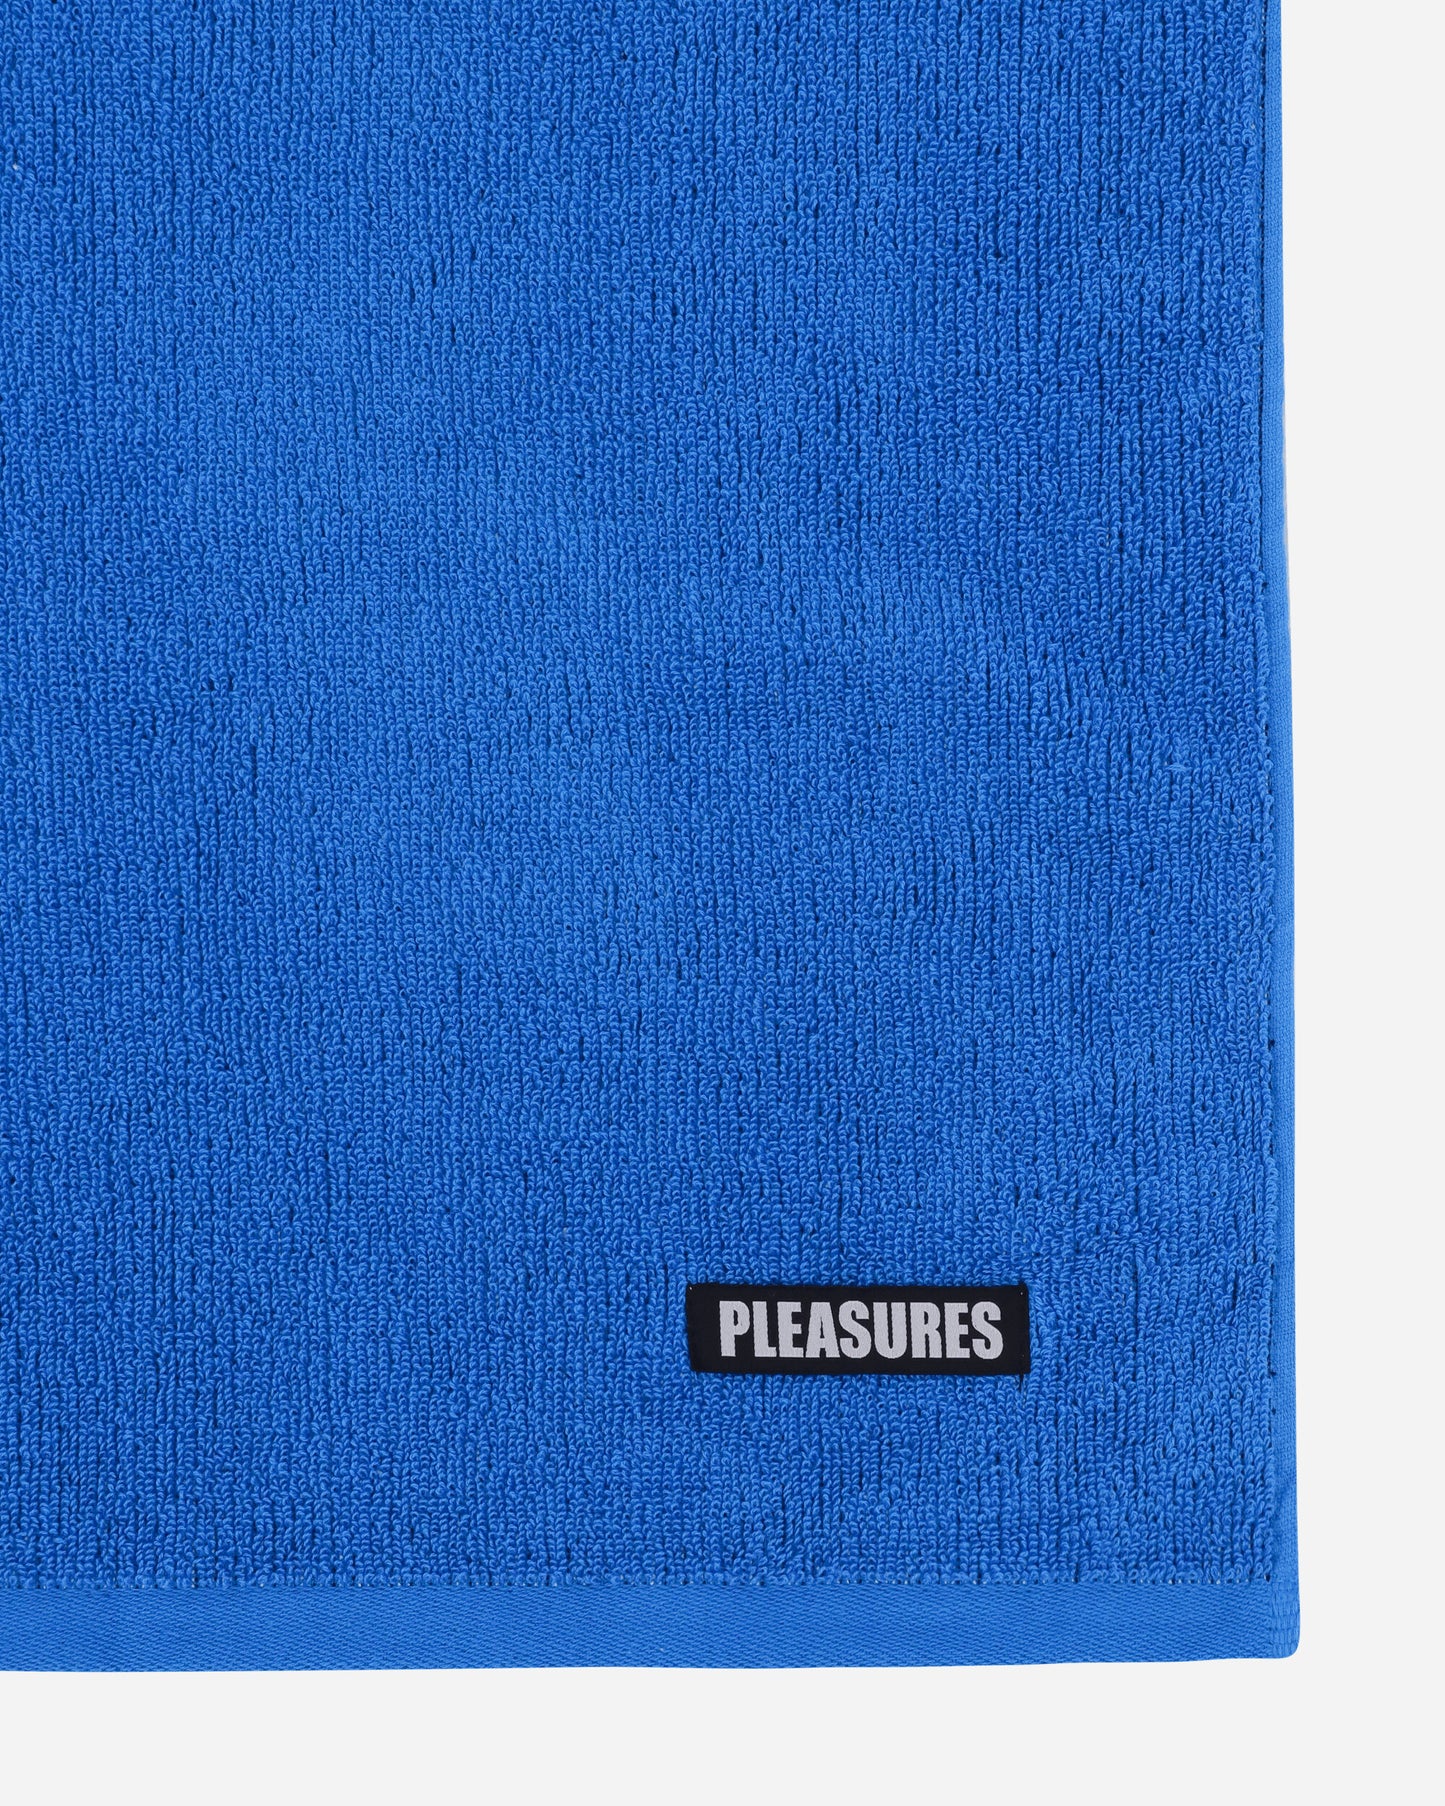 Pleasures Washing Machine Towel Blue Textile Beach Towels P23SY021 BLUE